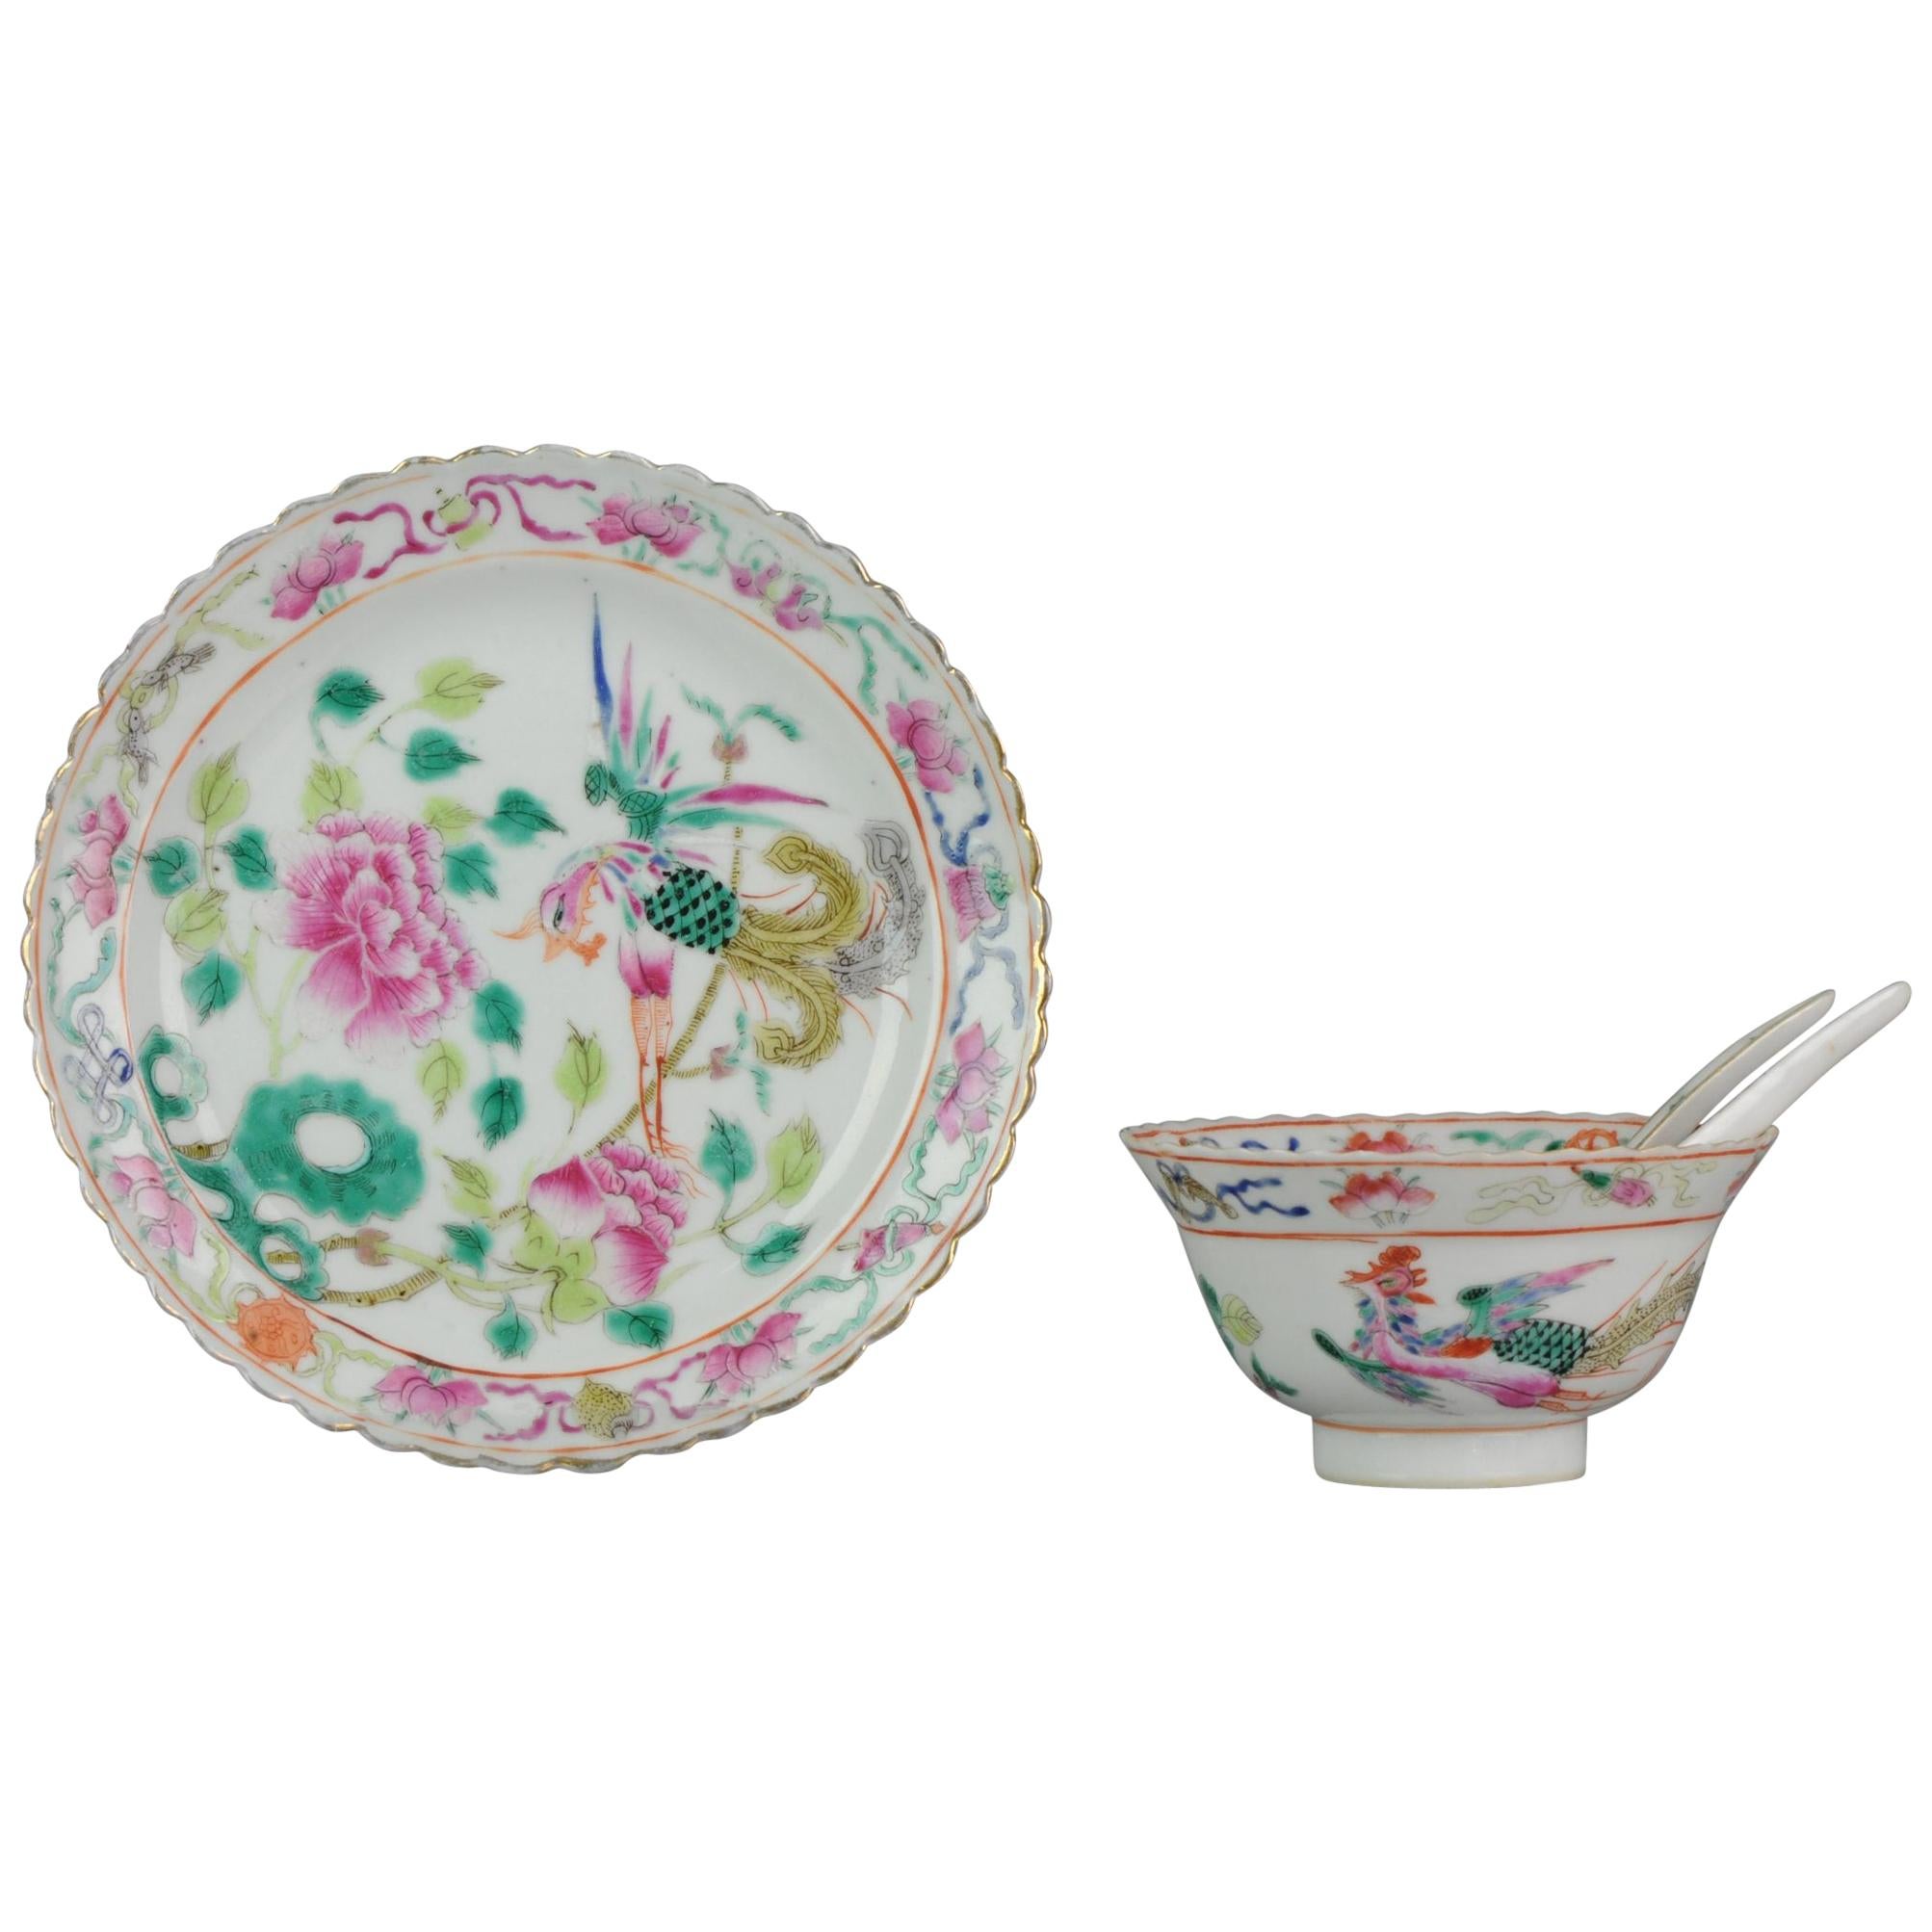 Straits Porcelain Chinese Bowl China SE Asian Market Peranakan Marked